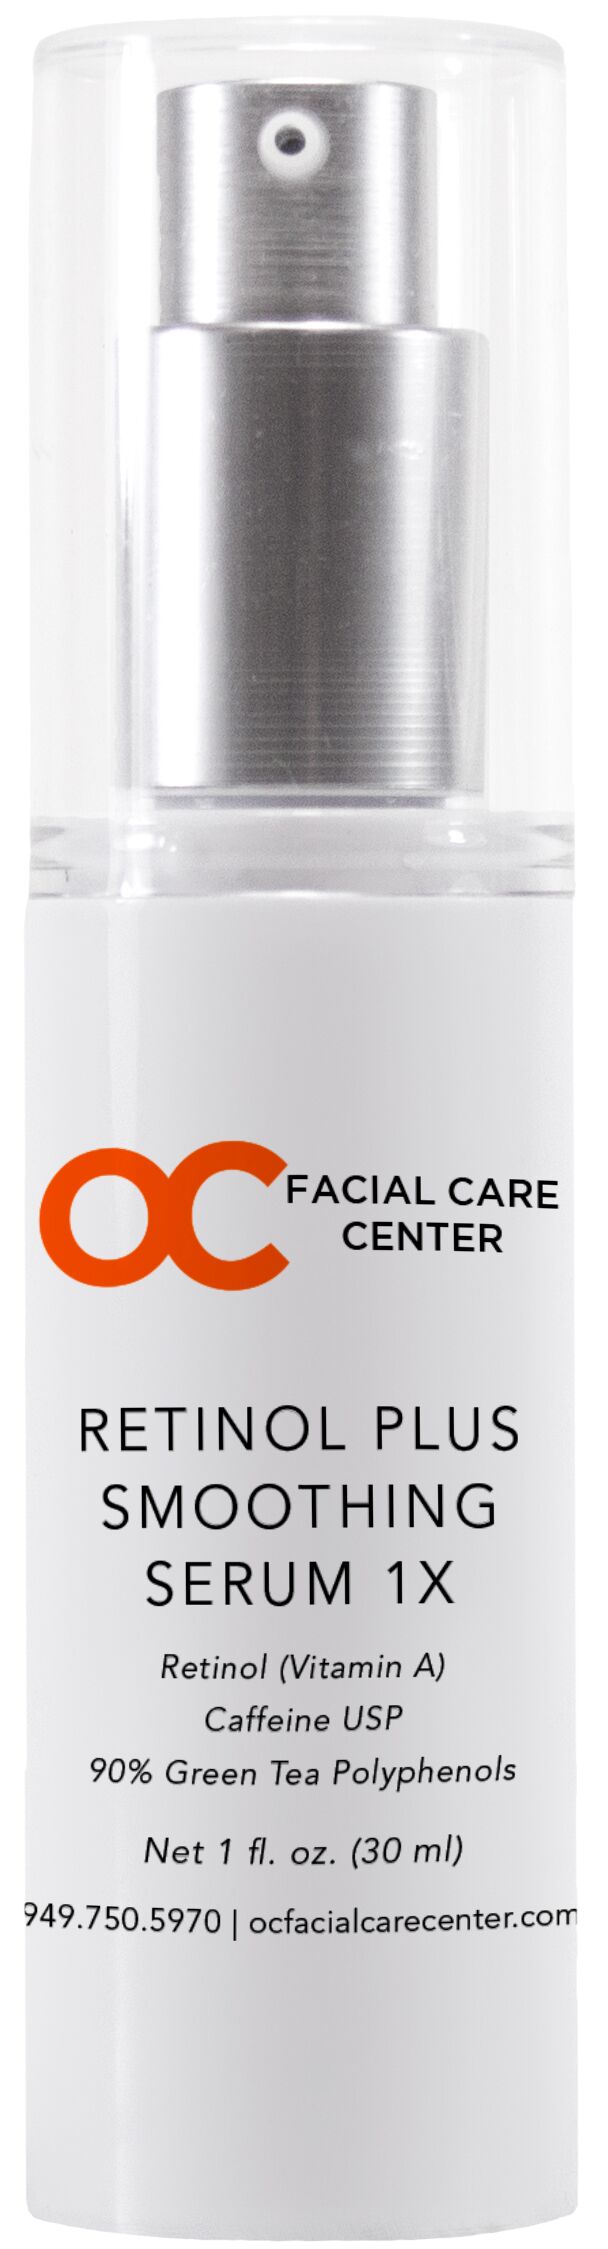 OC Facial Care Center Retinol Plus Smoothing Serum 3X